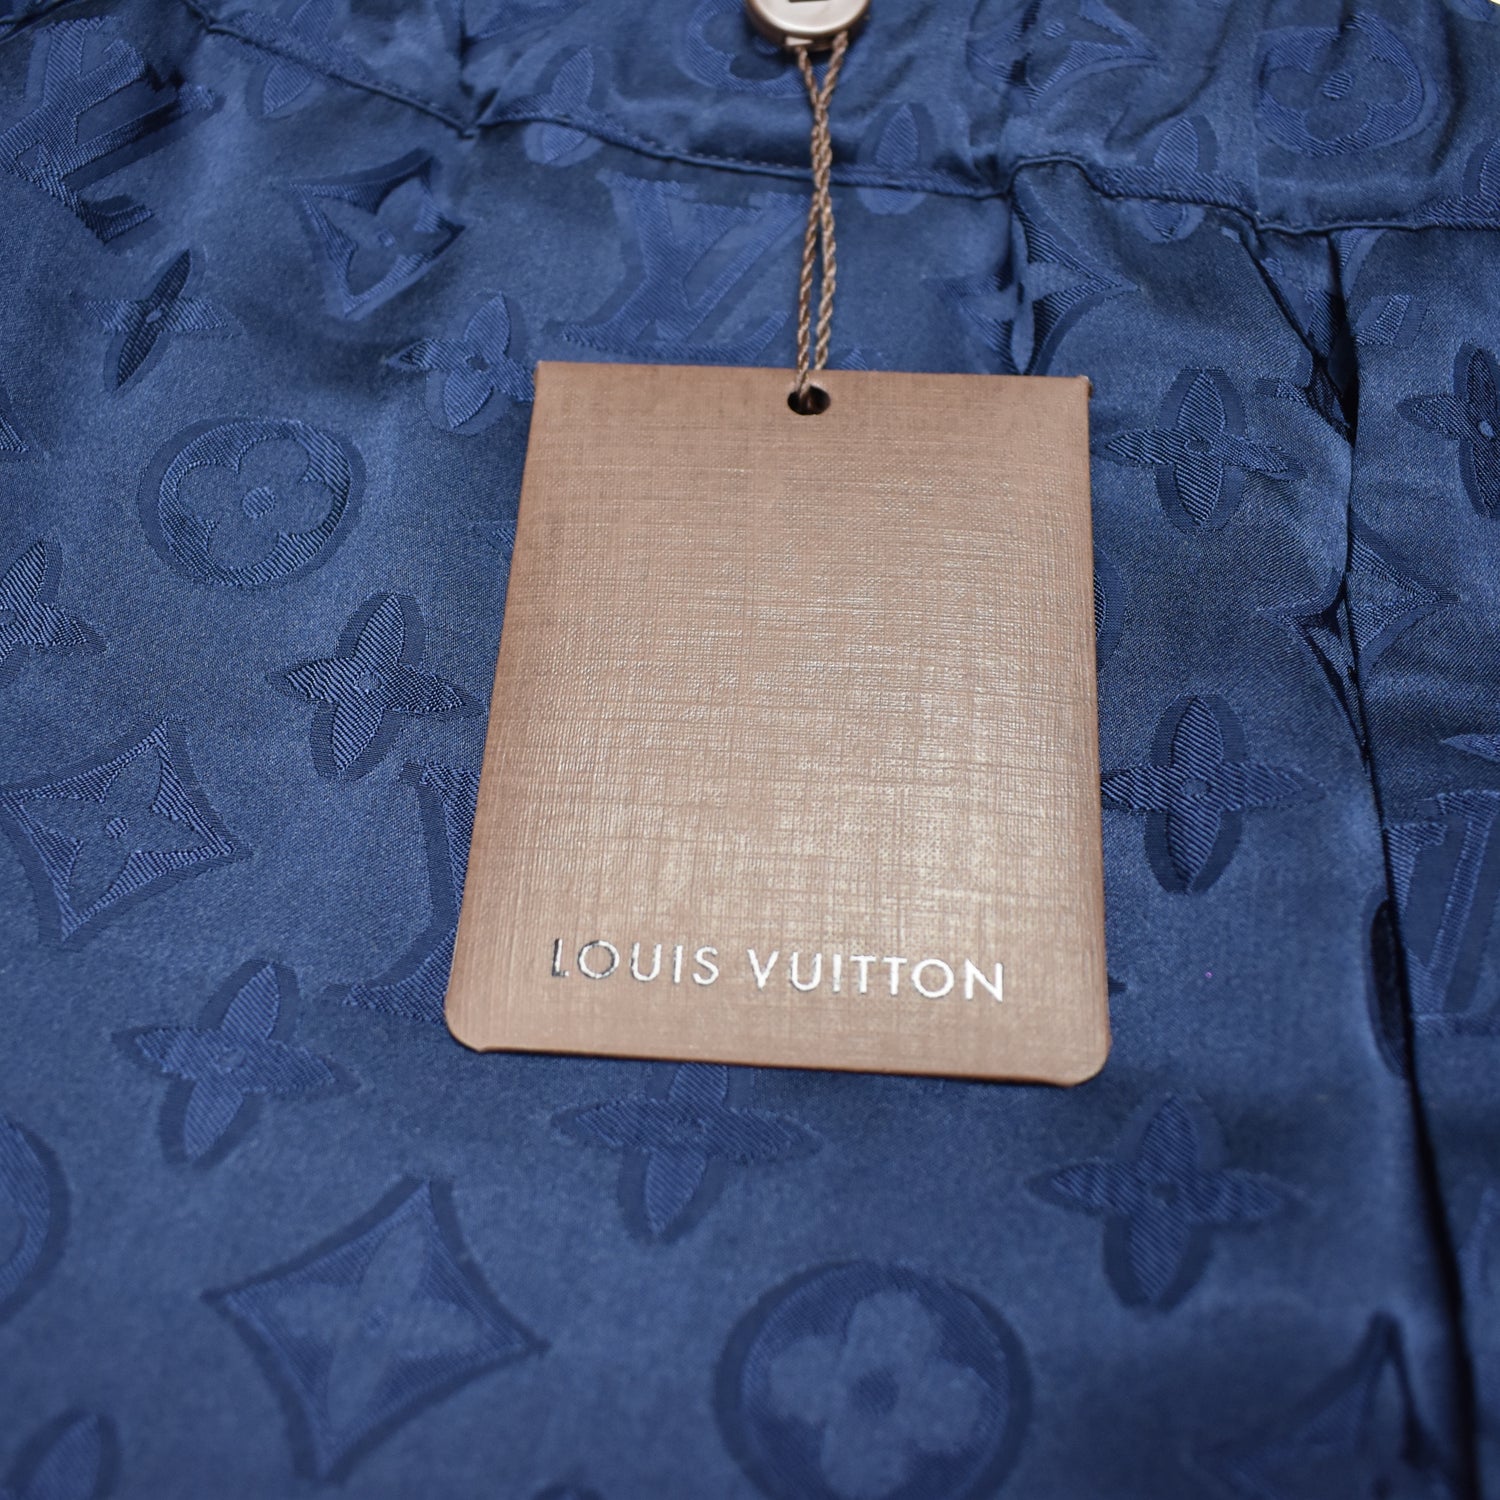 Supreme x Louis Vuitton Navy Blue Monogram Parka